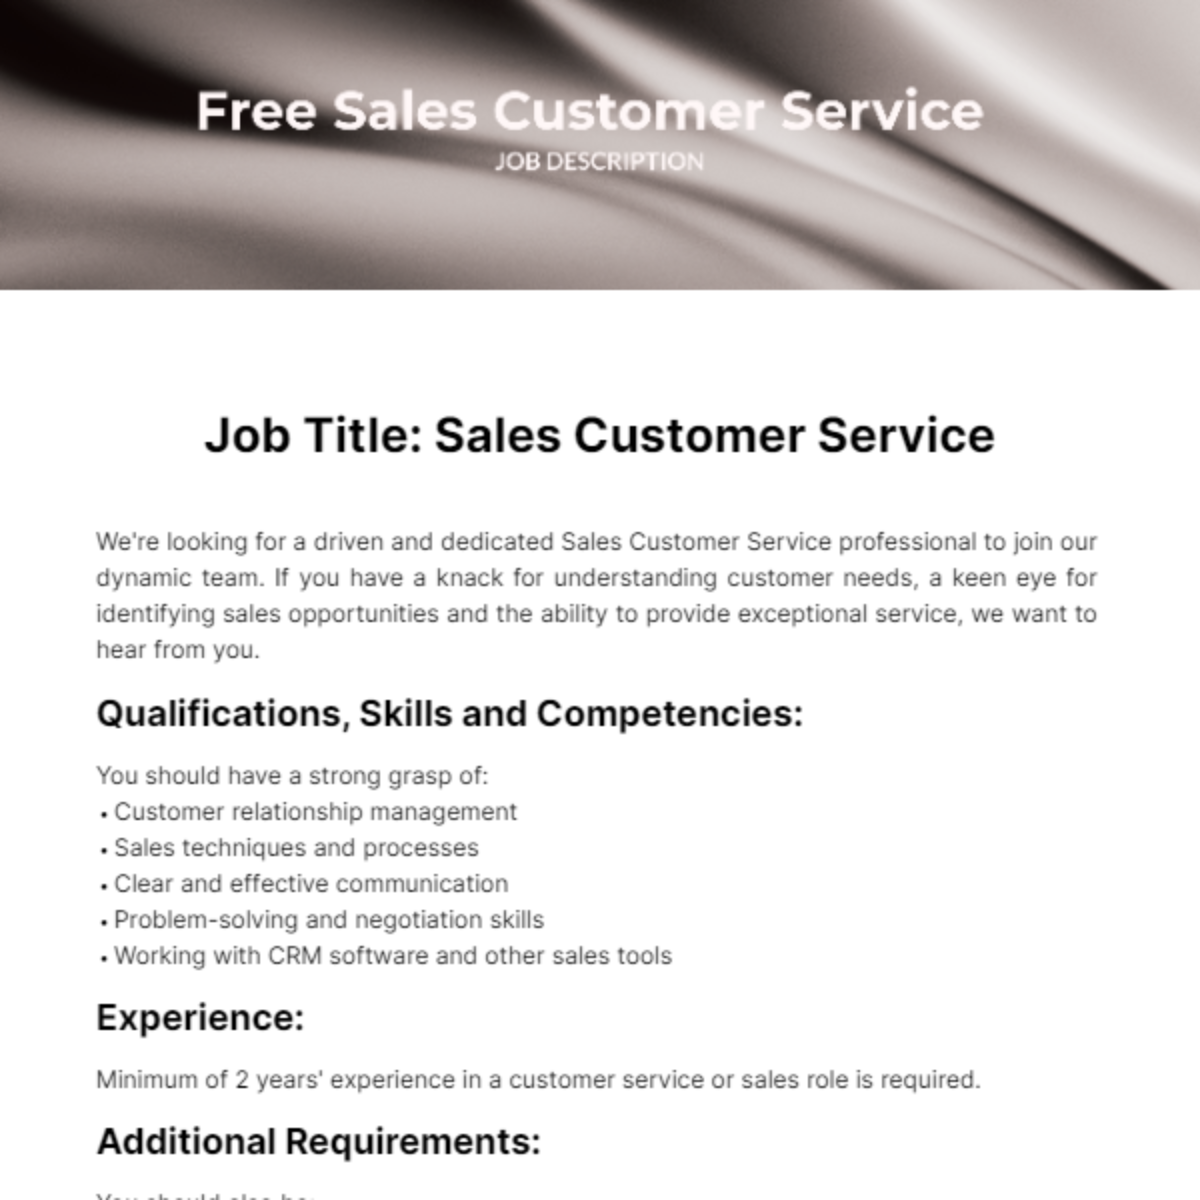 Sales Customer Service Job Description Template